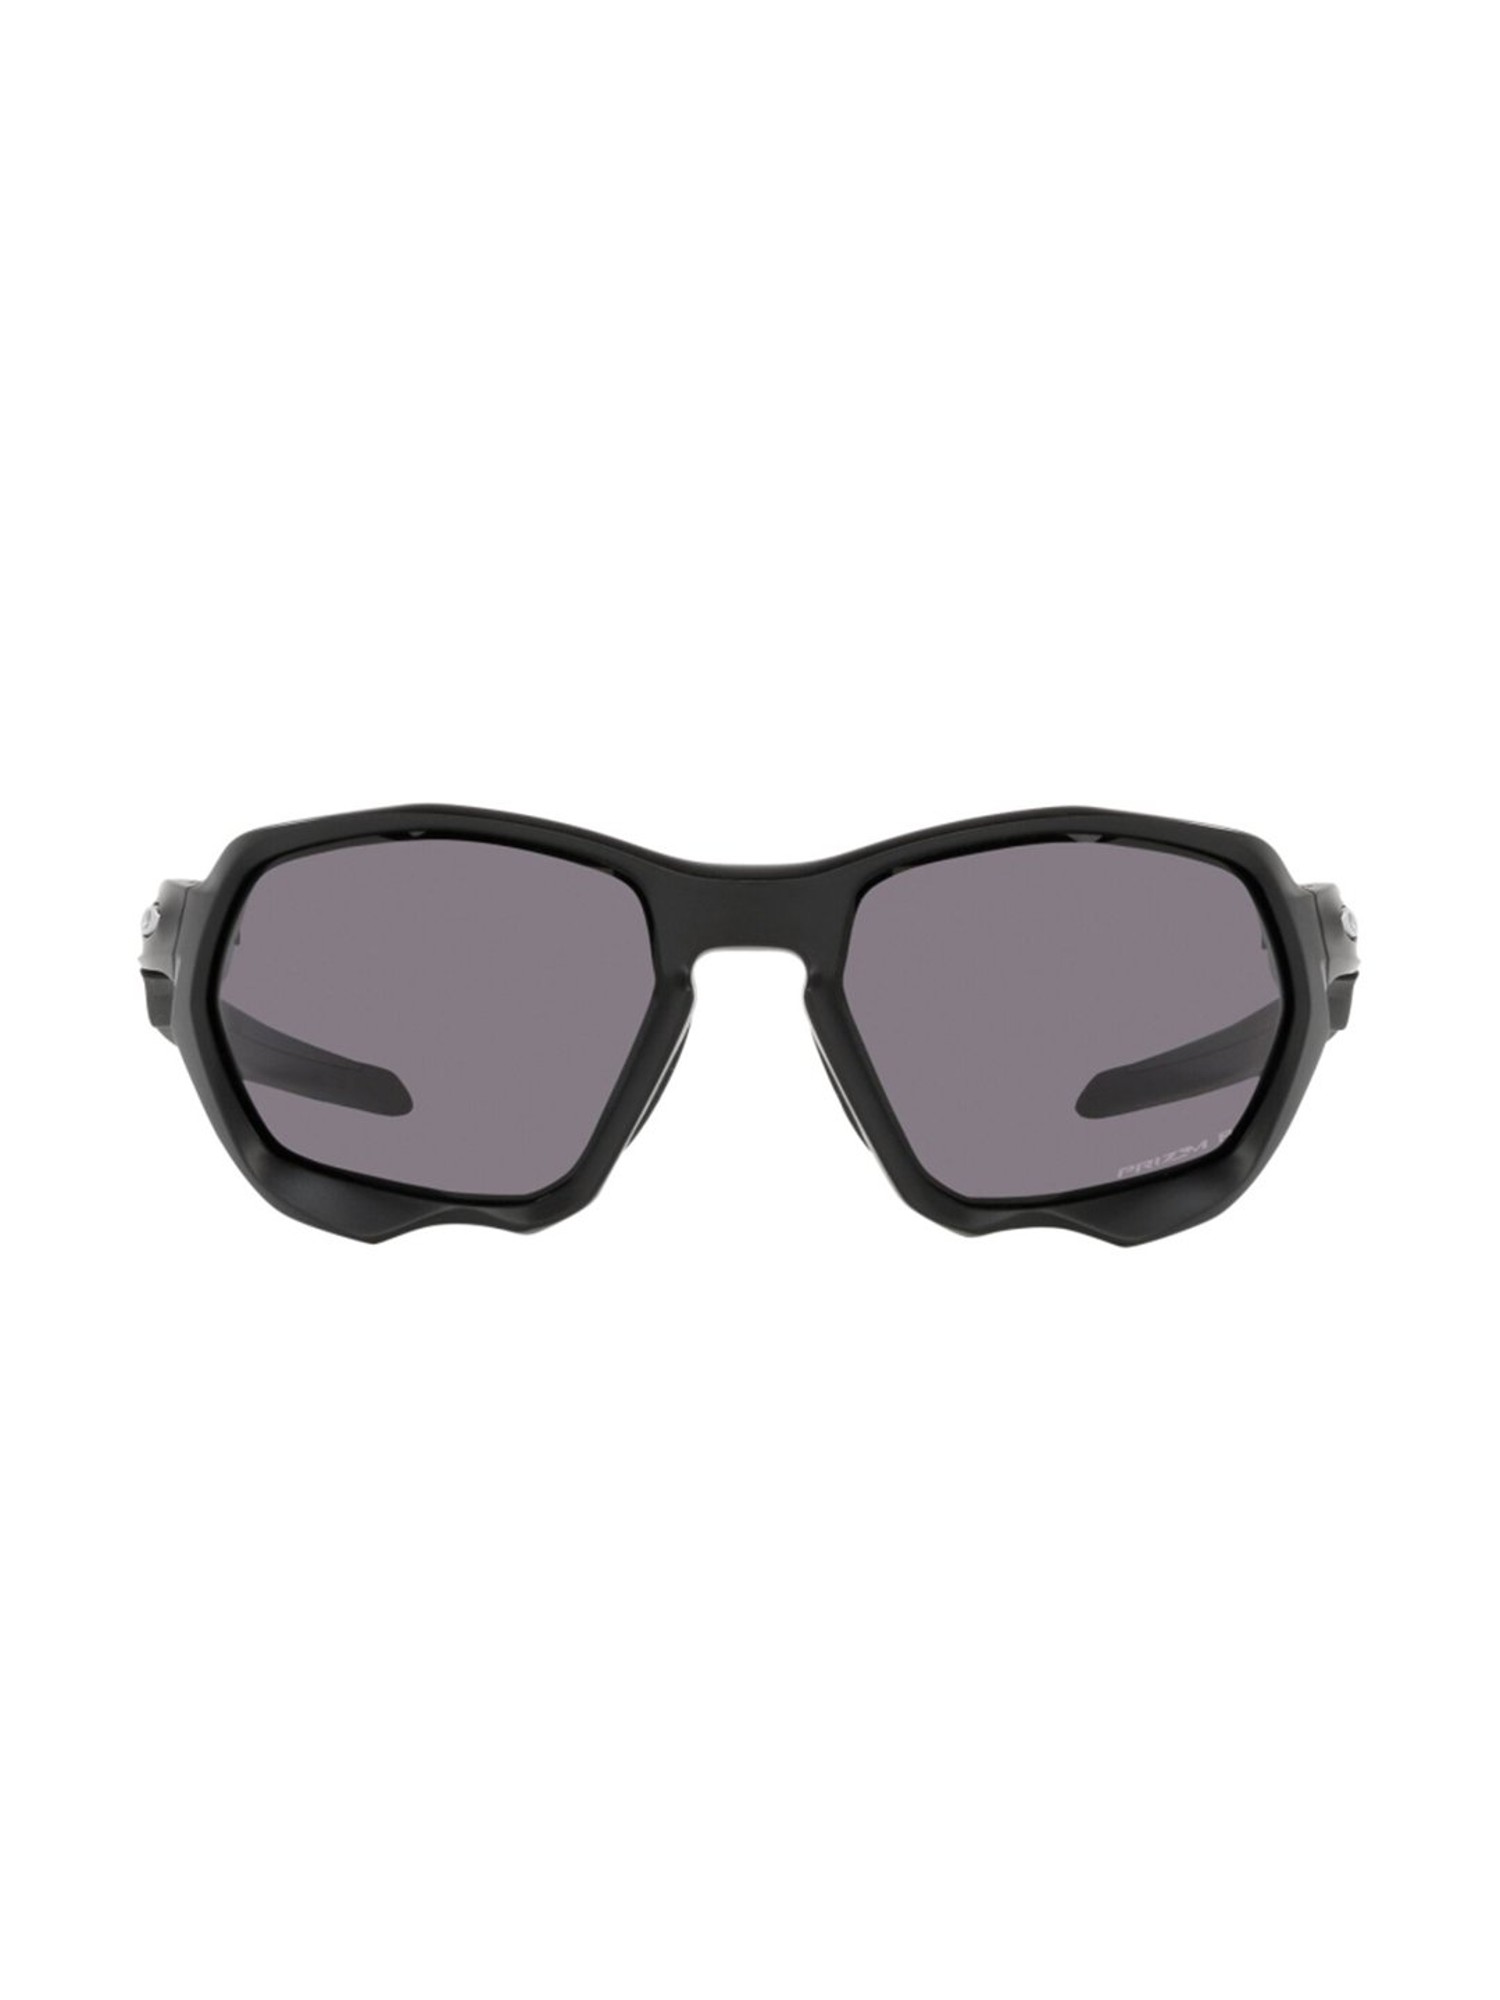 Buy Oakley 0OO9019 Light Grey Rectangular Sunglasses - 59 mm 